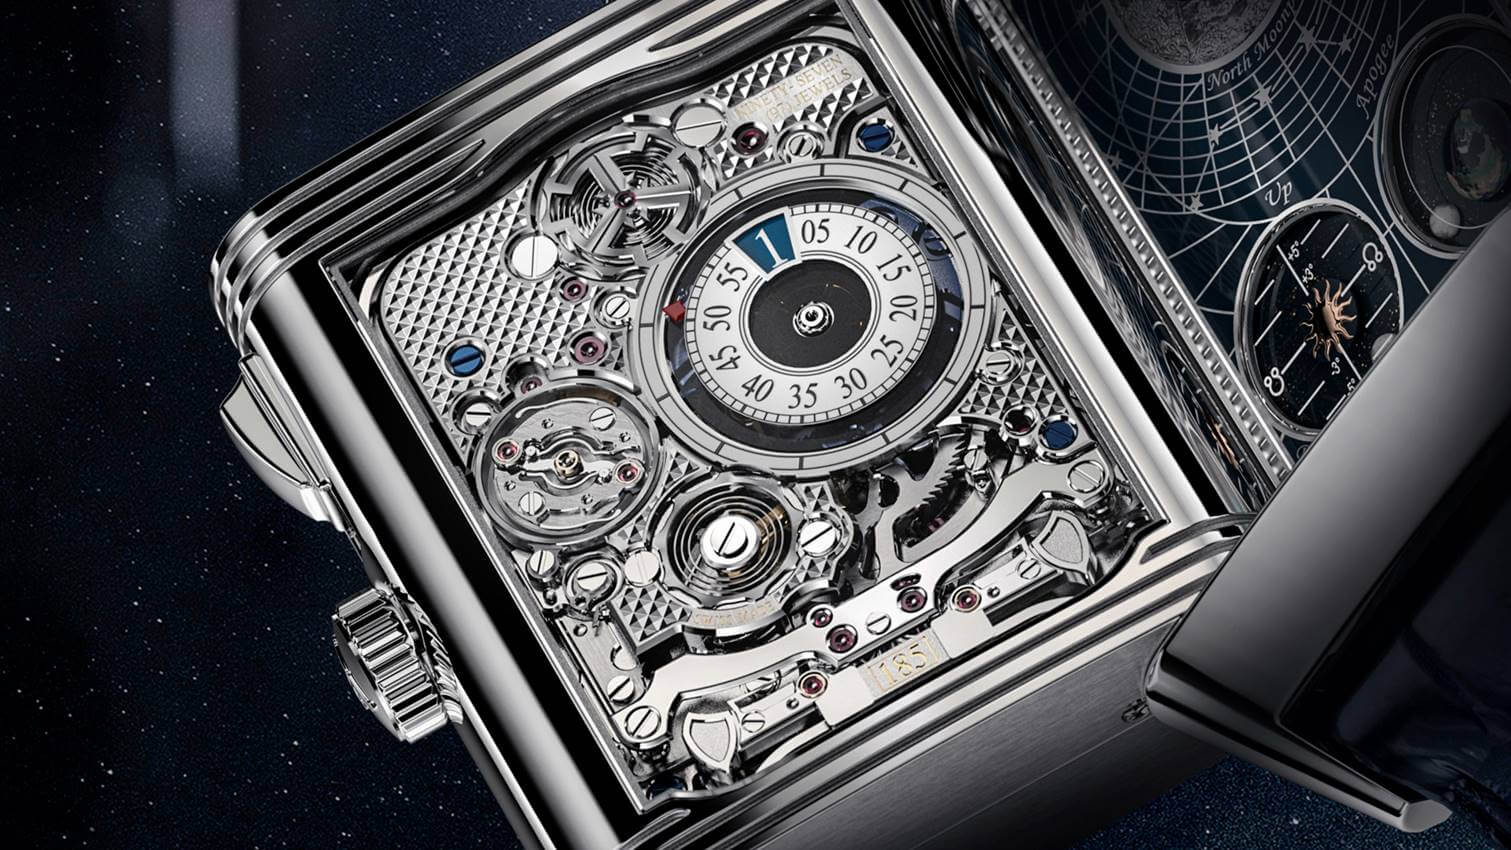 Watches and Wonders Geneva 2021 - targi zegarków online